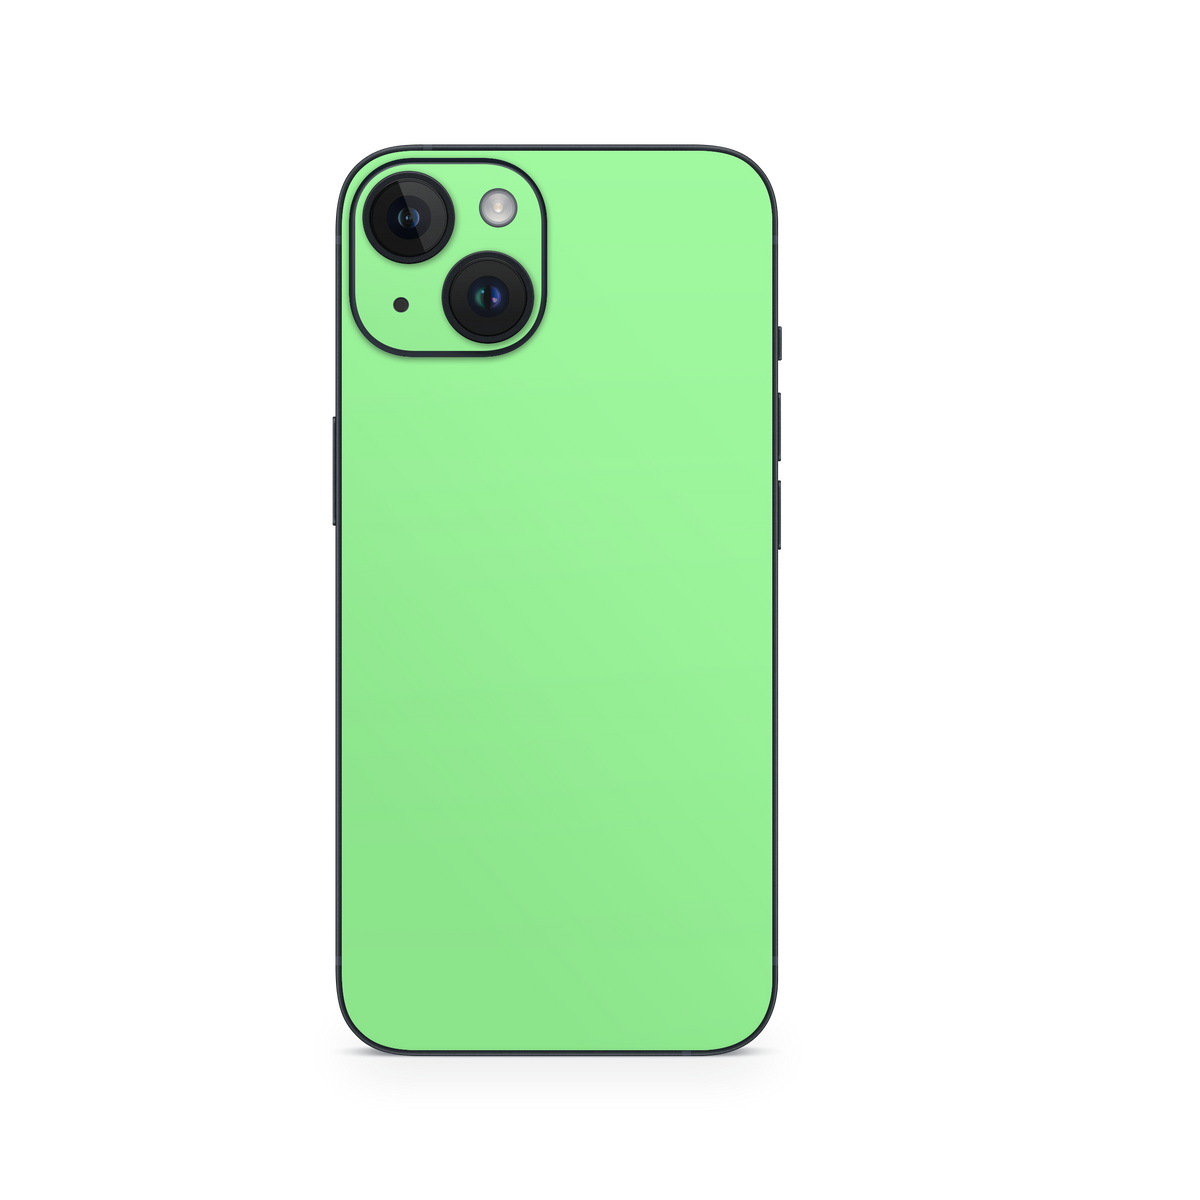 Apple iPhone Mint Green Skin